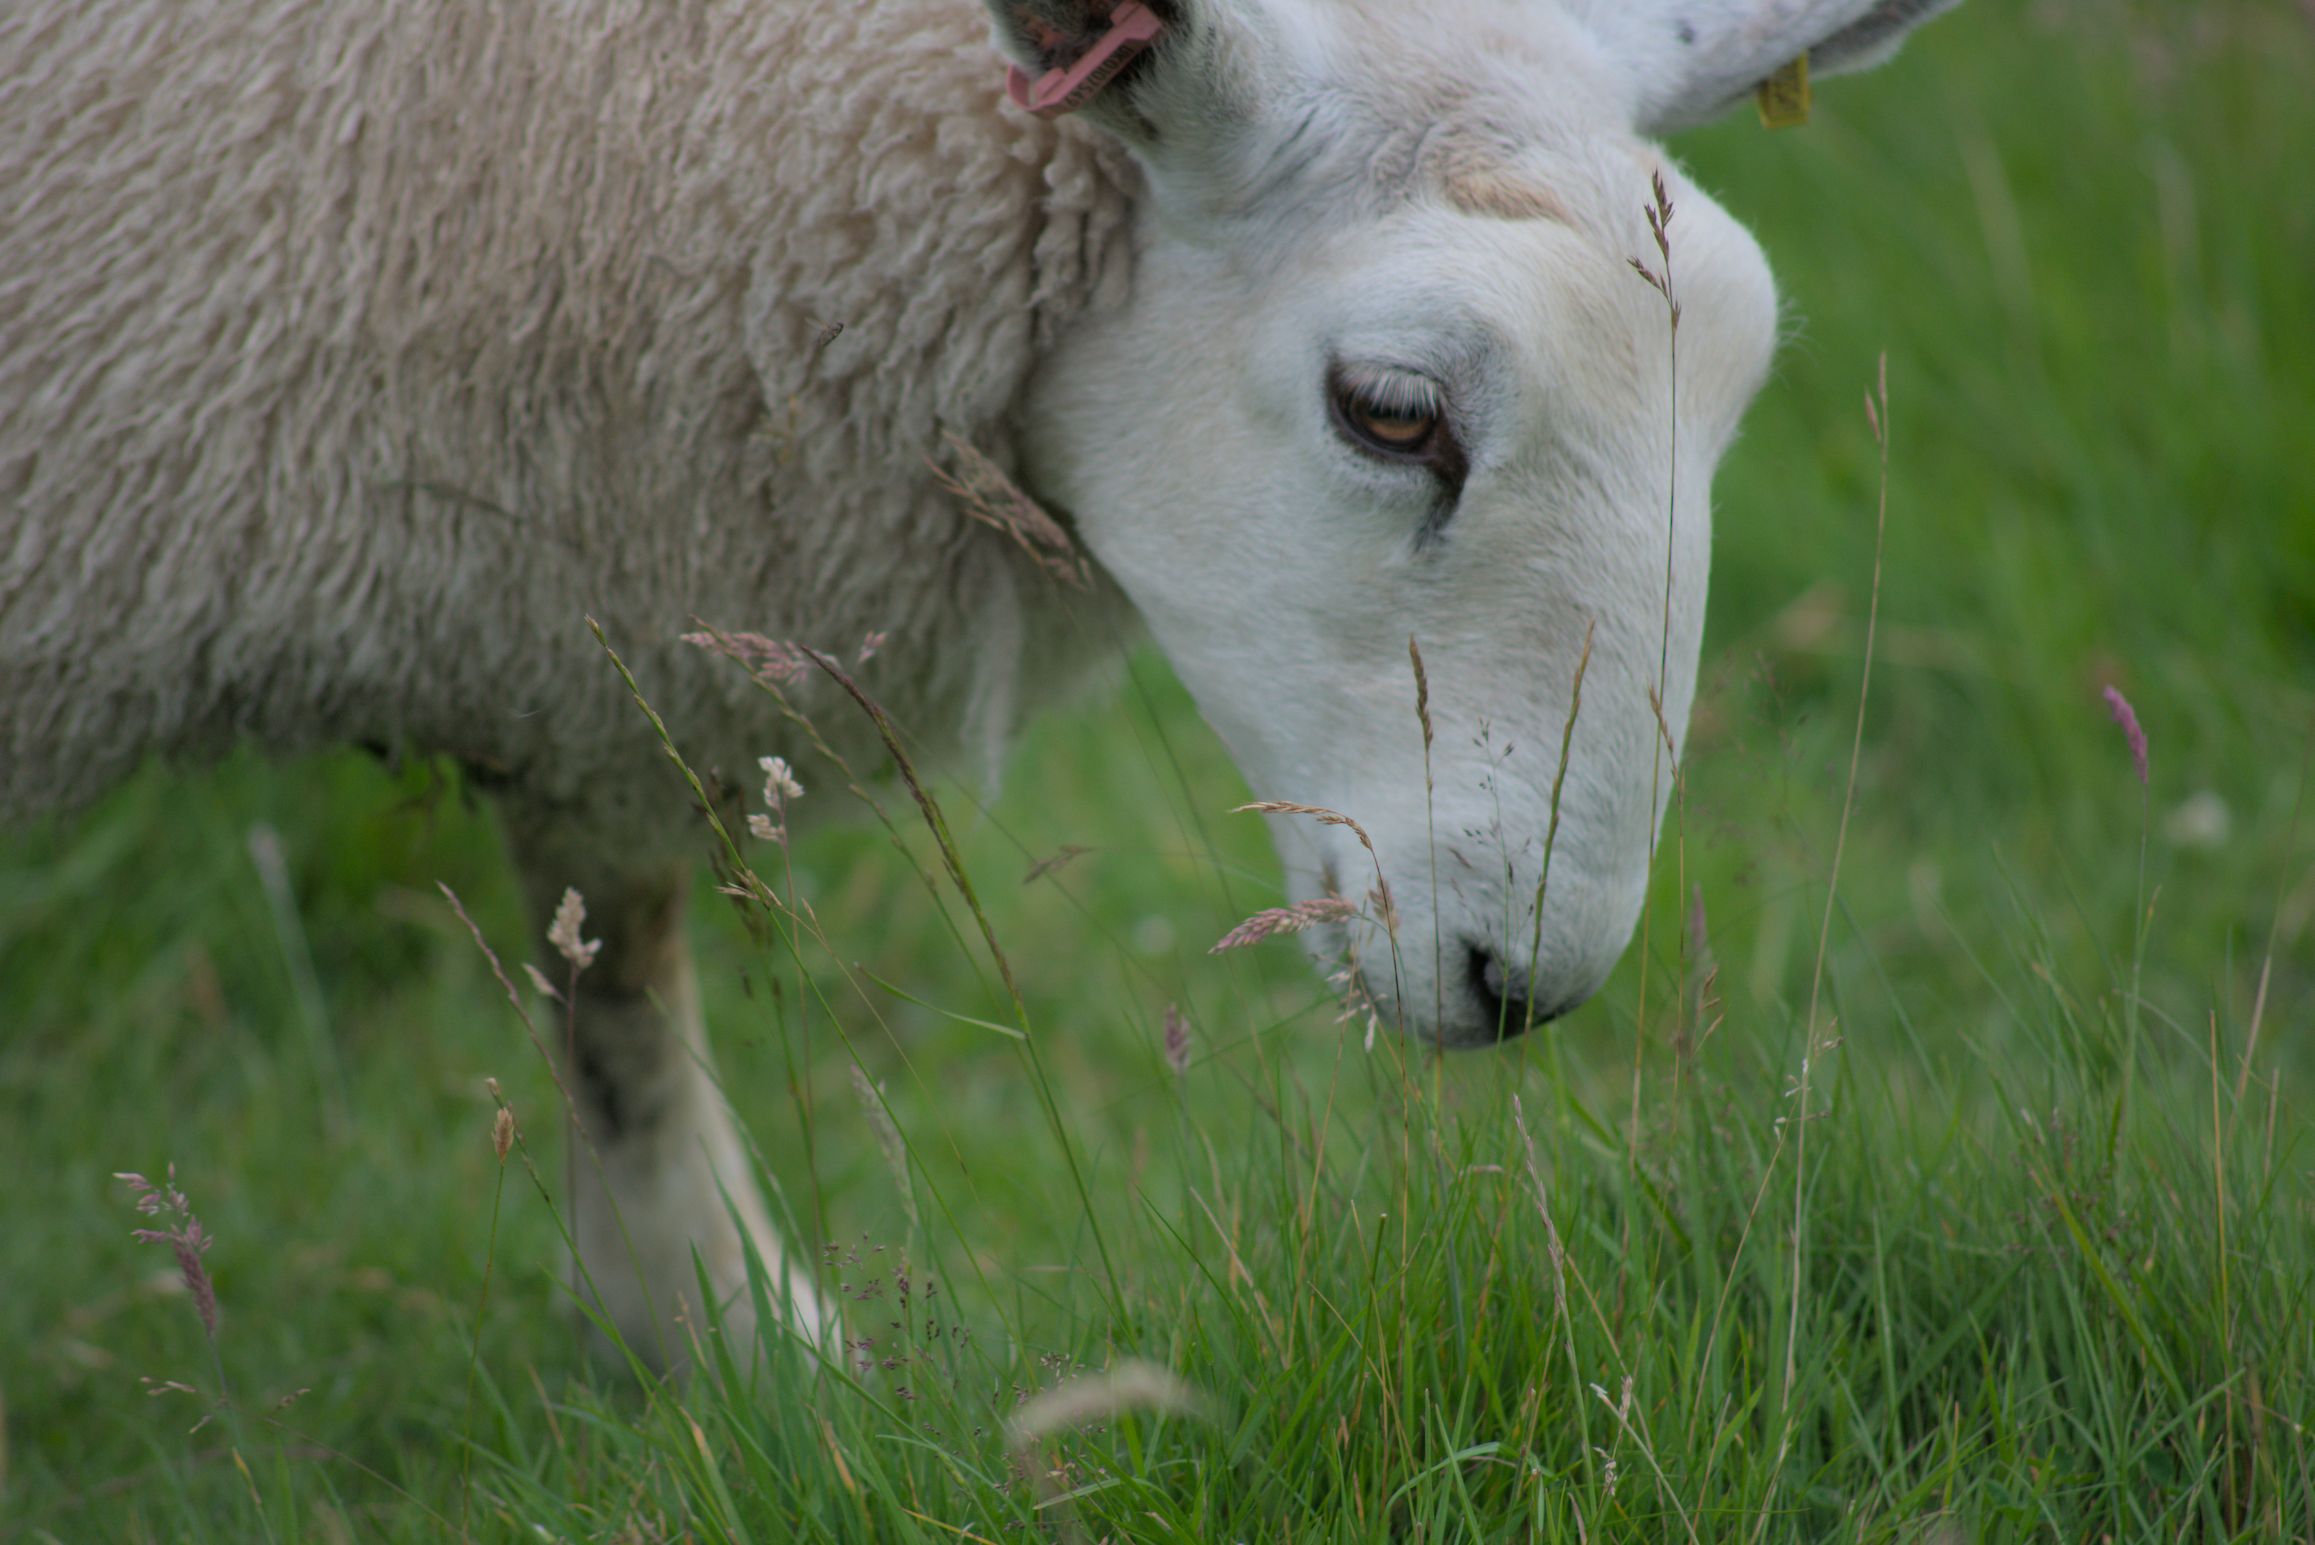 Sheep in meadow